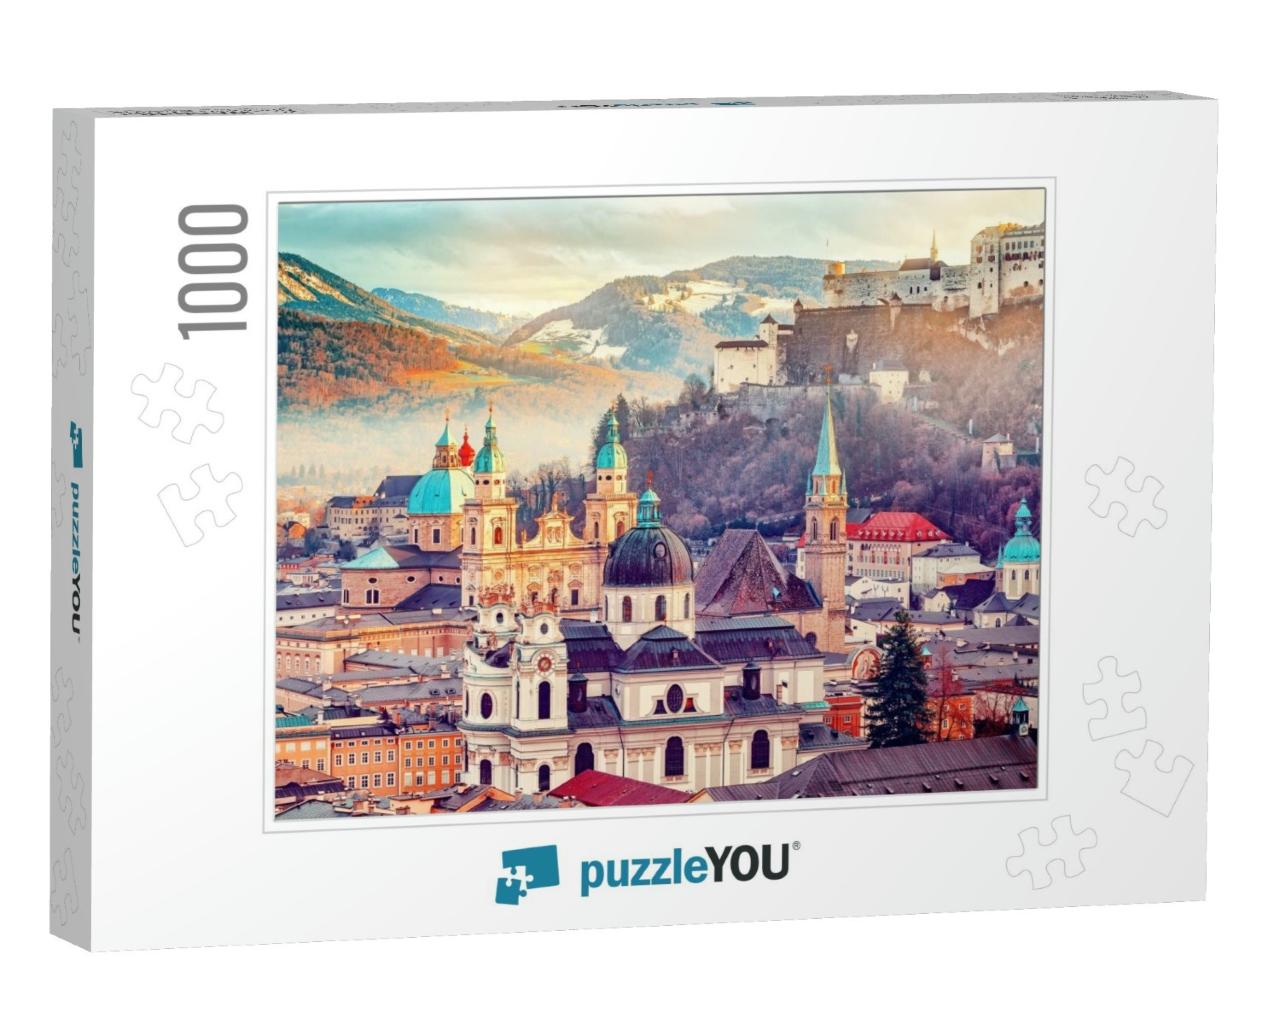 Salzburg, Austria, Europe. City in Alps of Mozart Birth... Jigsaw Puzzle with 1000 pieces